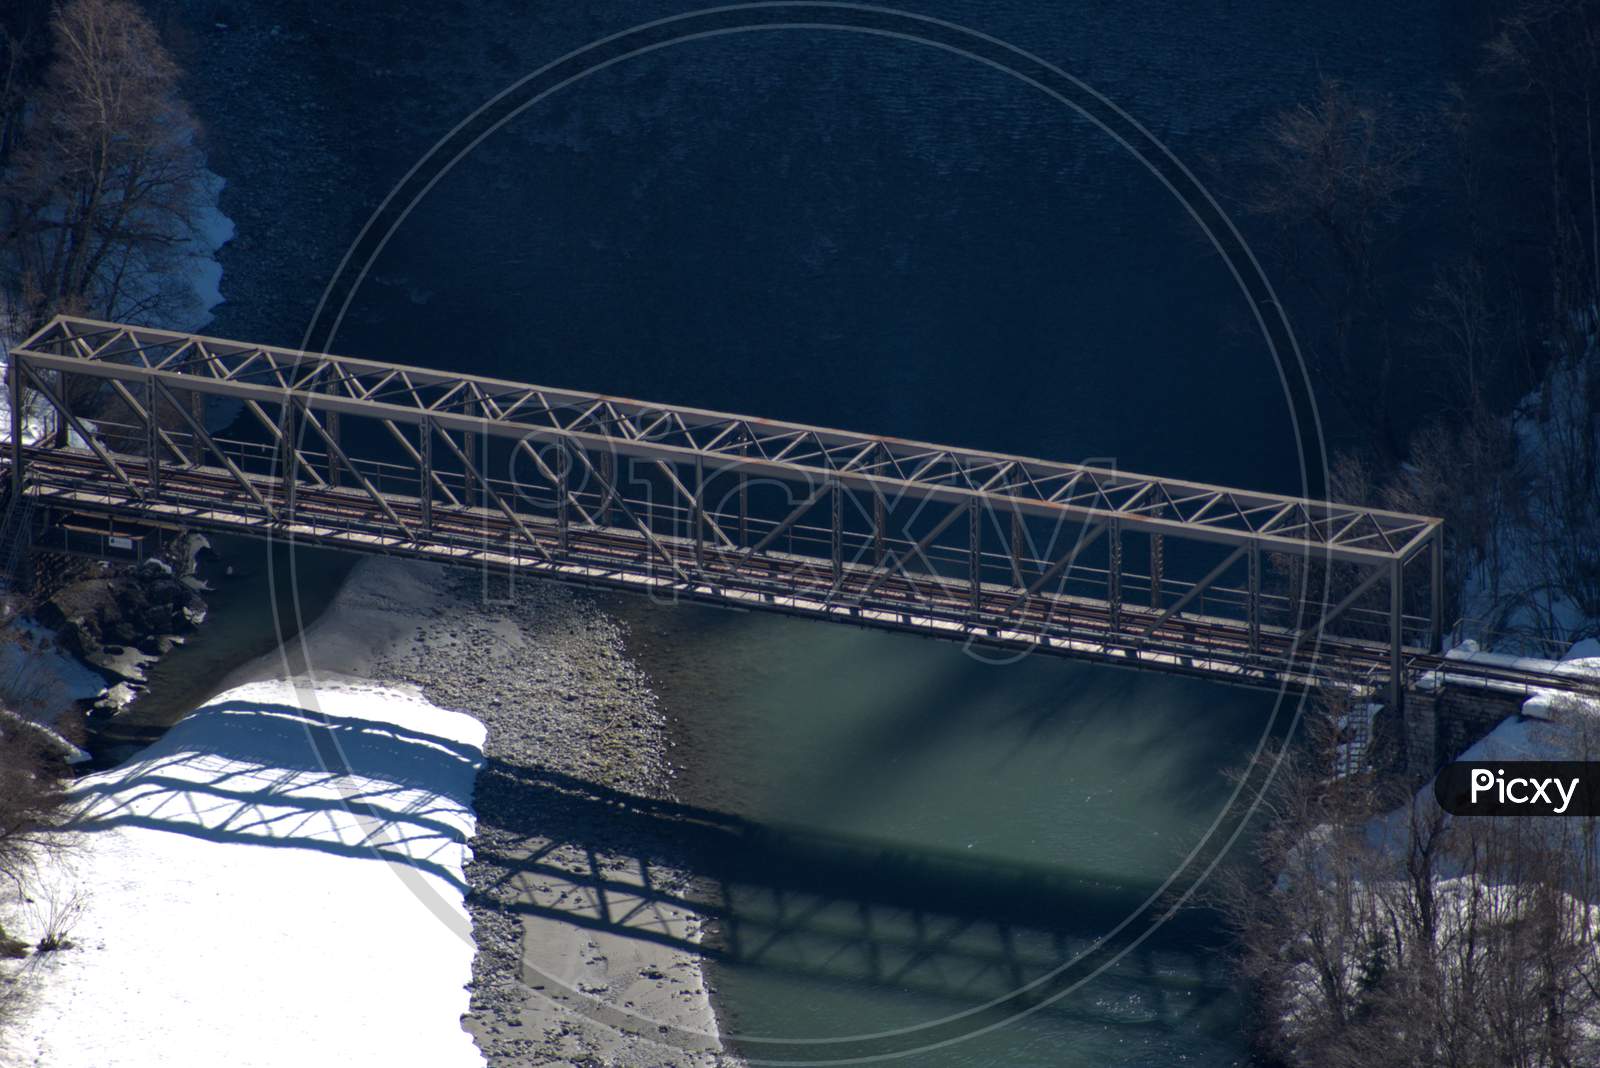 Railway Bridge Over The Rhine River Near Flims In Switzerland 20.2.2021